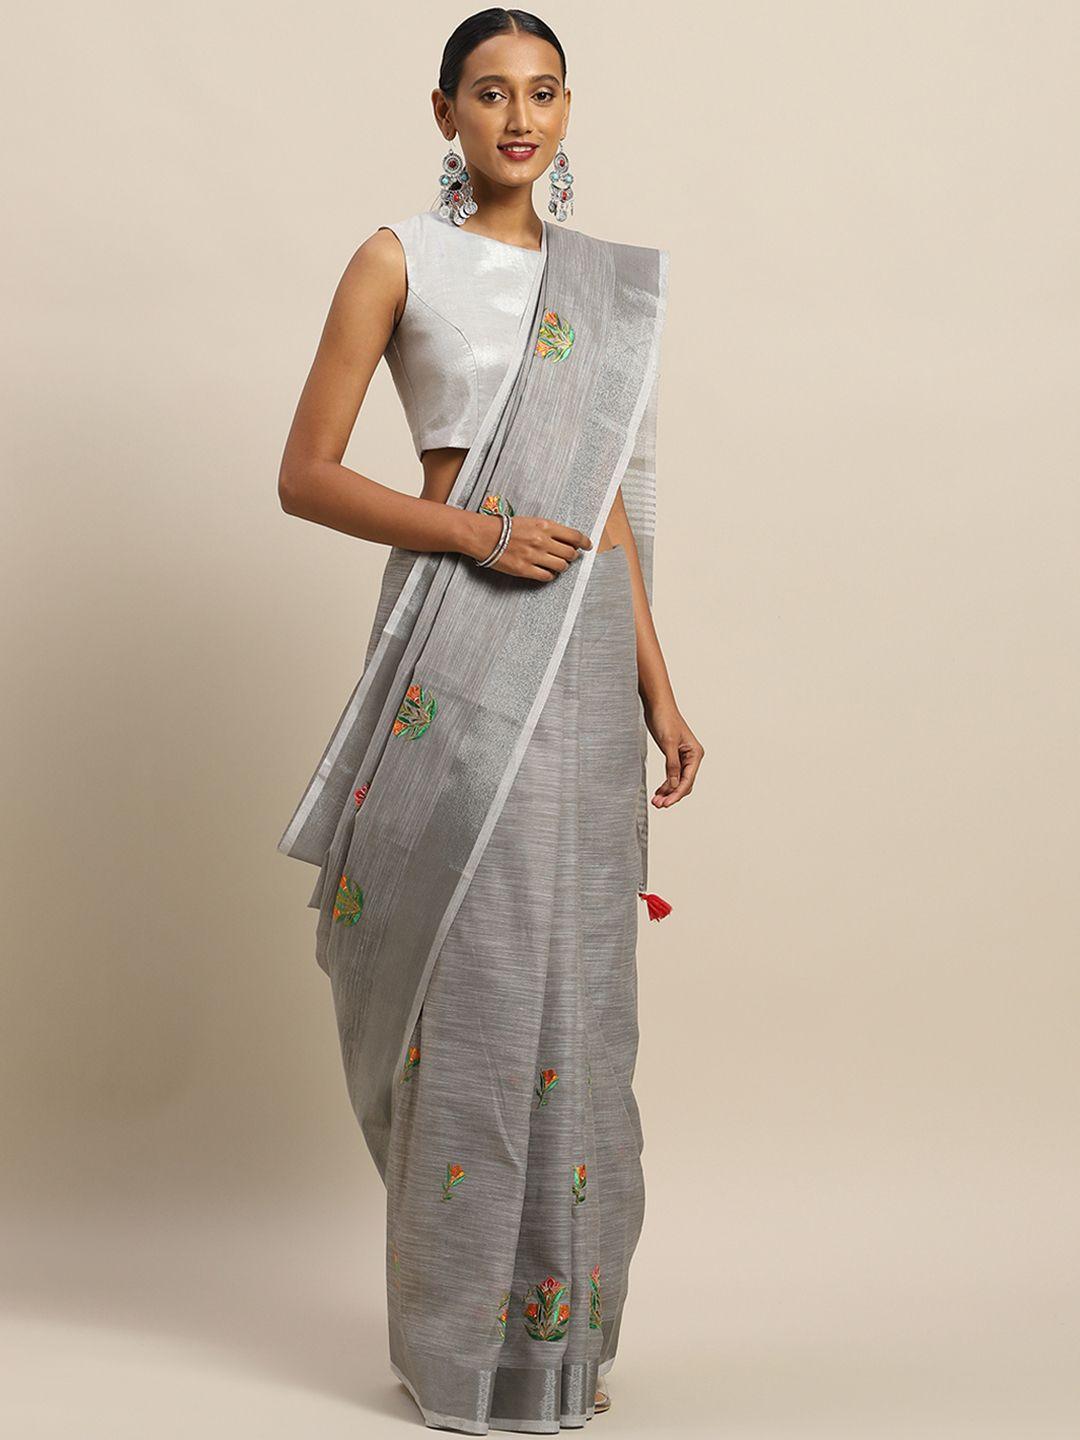 sangam prints grey linen blend embroidered handloom kota saree